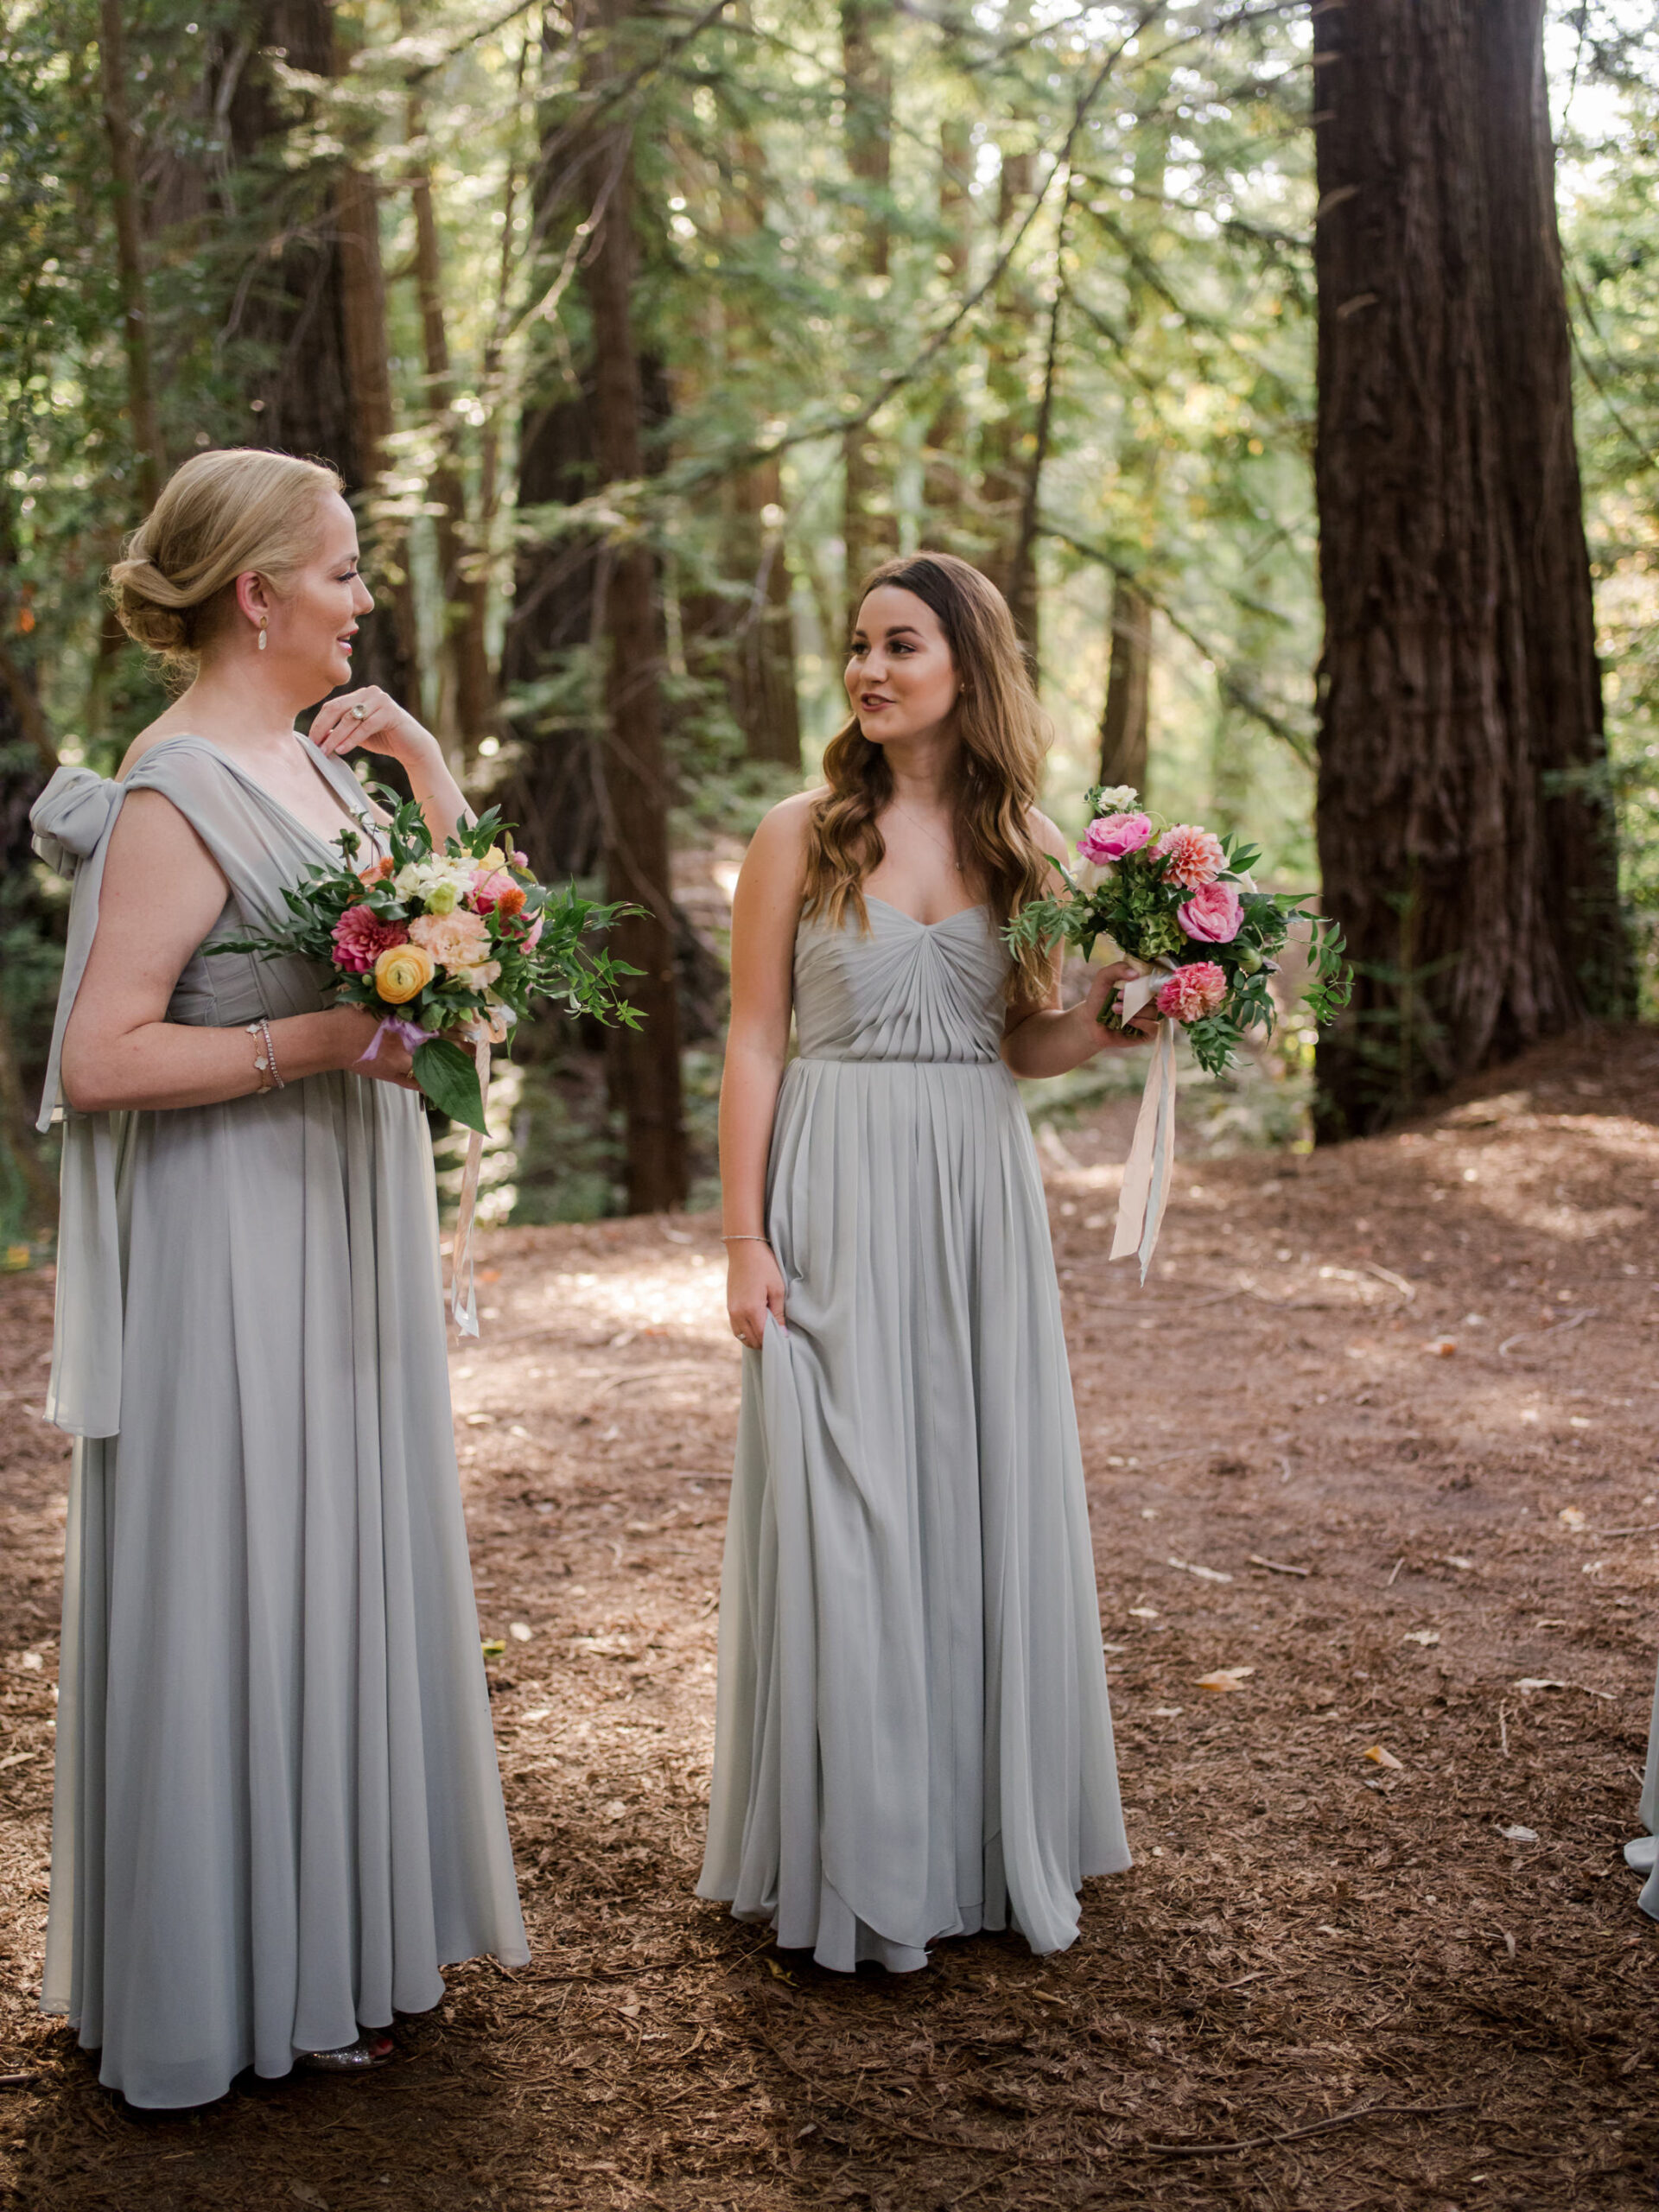 Carmel-Valley-Redwoods-Santa-Lucia-Preserve-Liz-Banfield-Photographer-California-sophisticated-outdoor-wedding 30.JPG